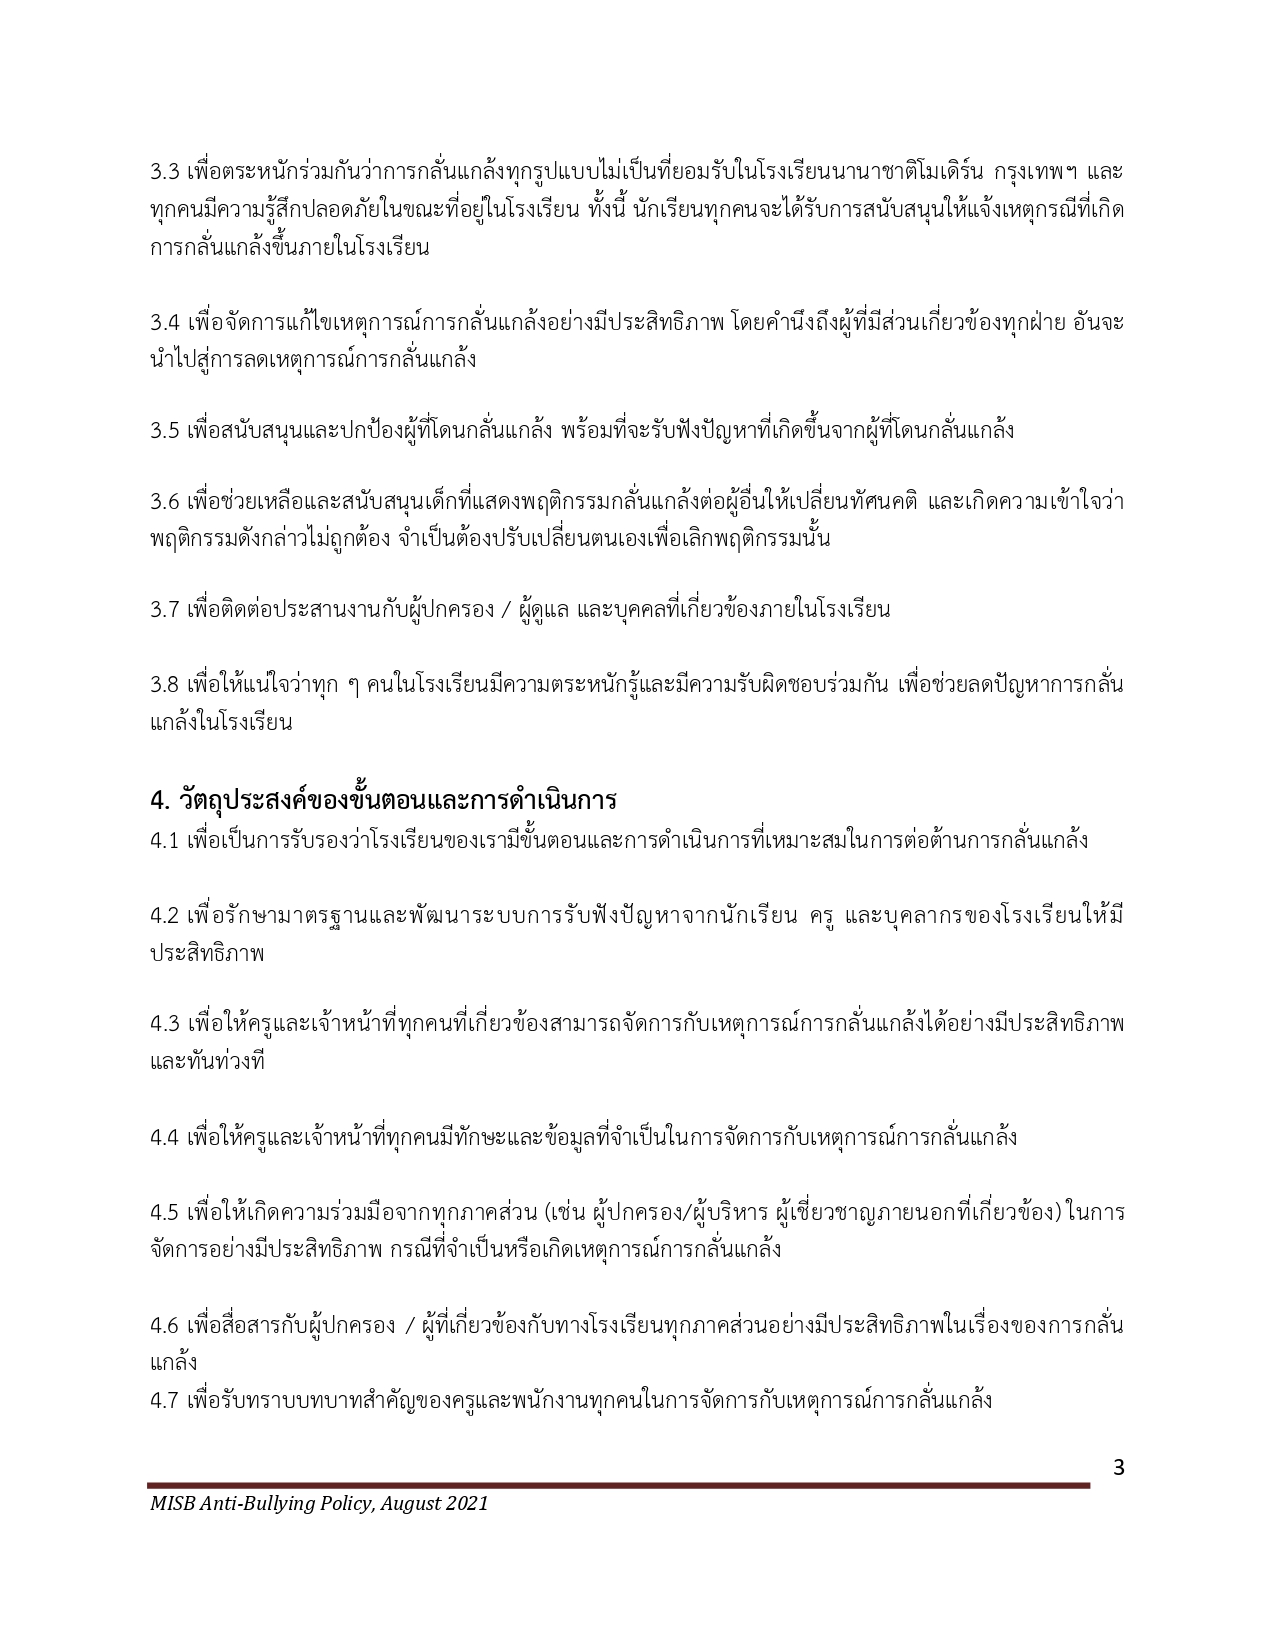 Anti Bullying Policy 2021 2023 Thai Language page 0005